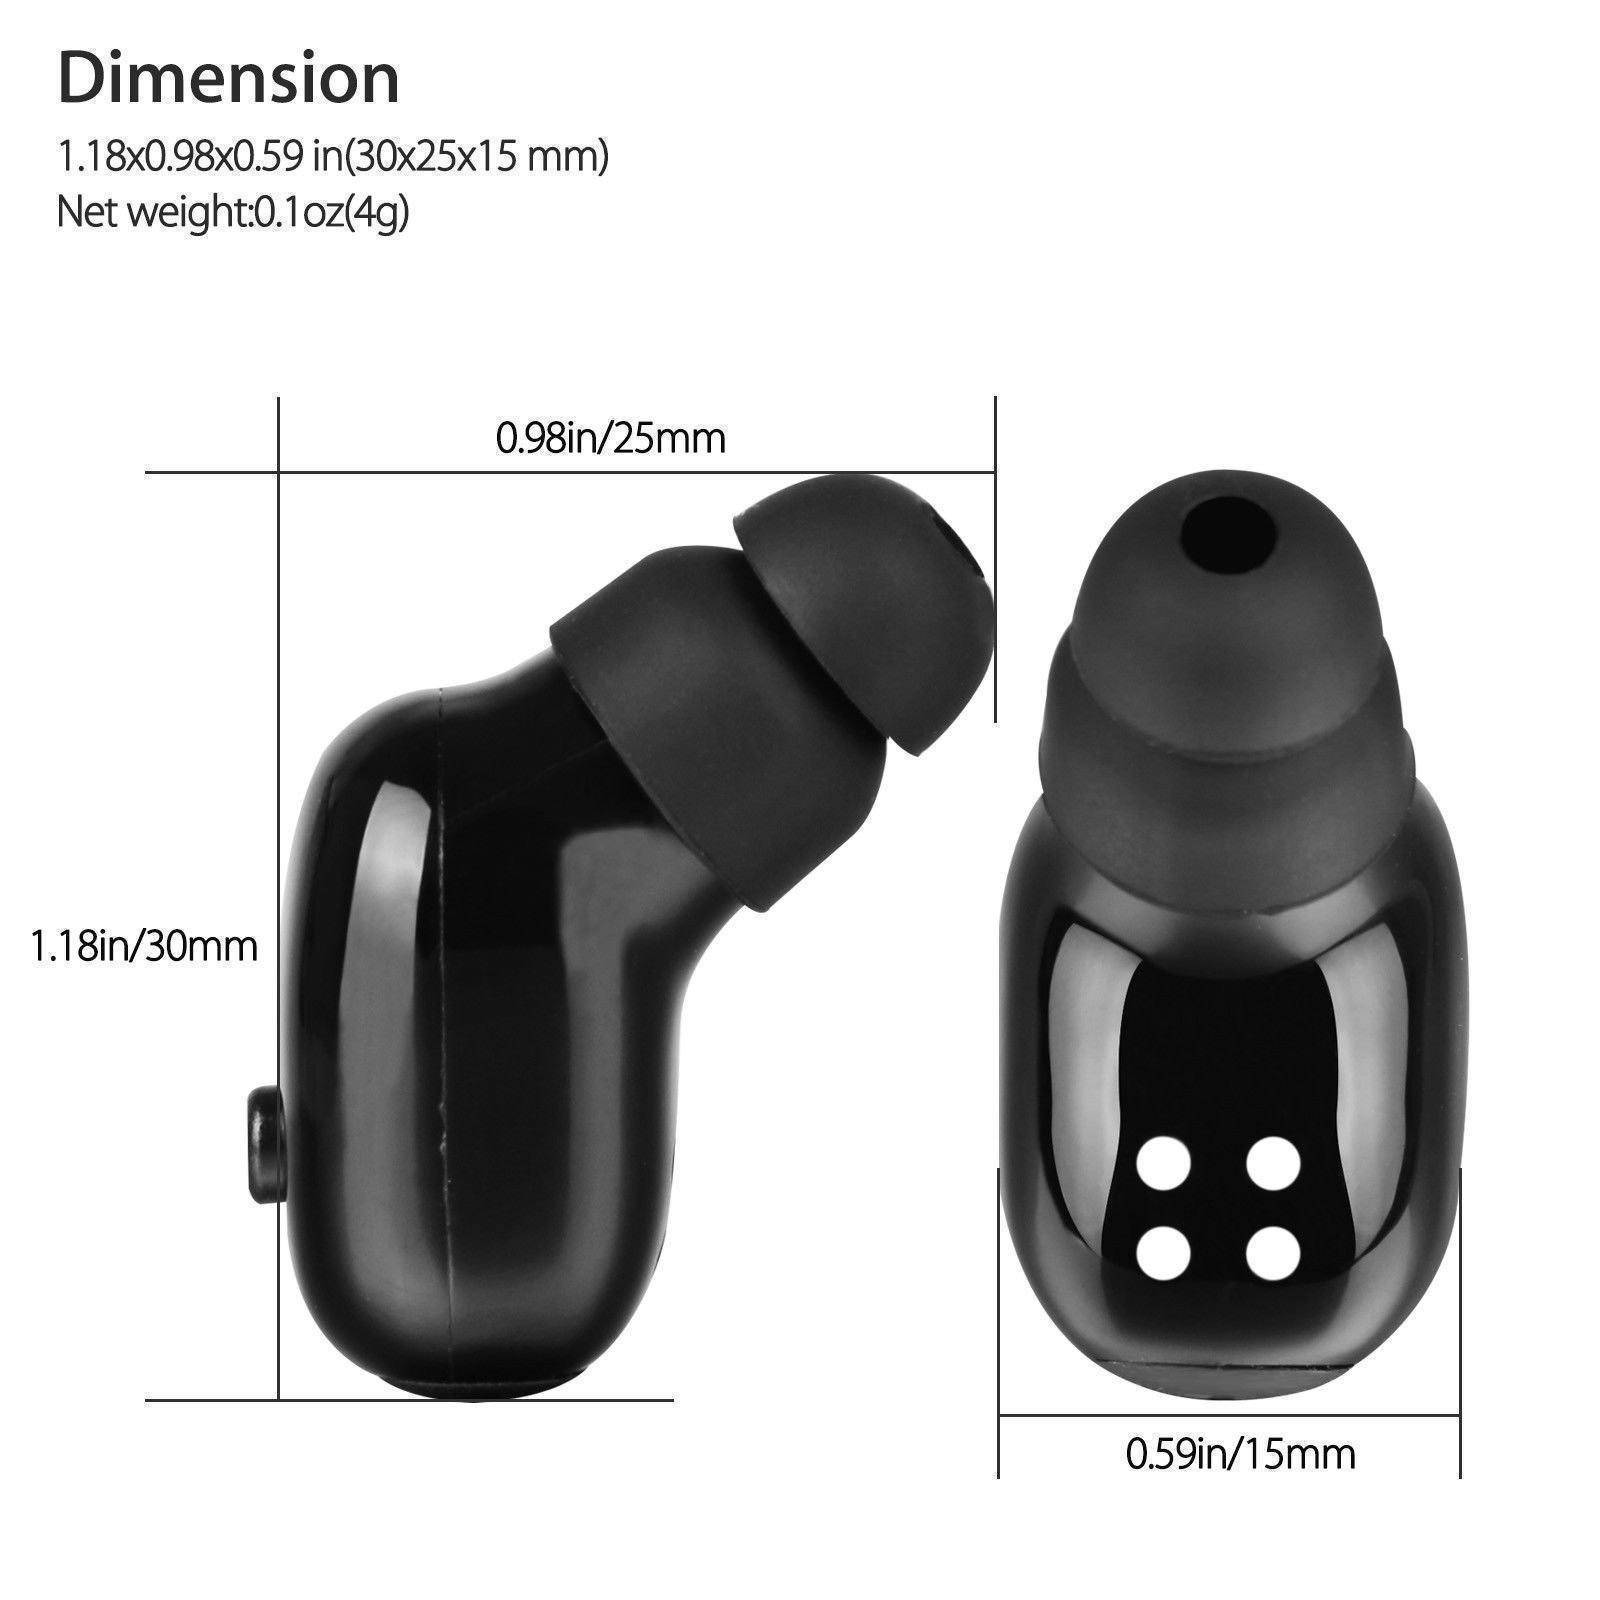 Waterproof Wireless Bluetooth Mini Sports Headphones In-Ear Earbud Earphones Earpiece for iPhone Samsung Android